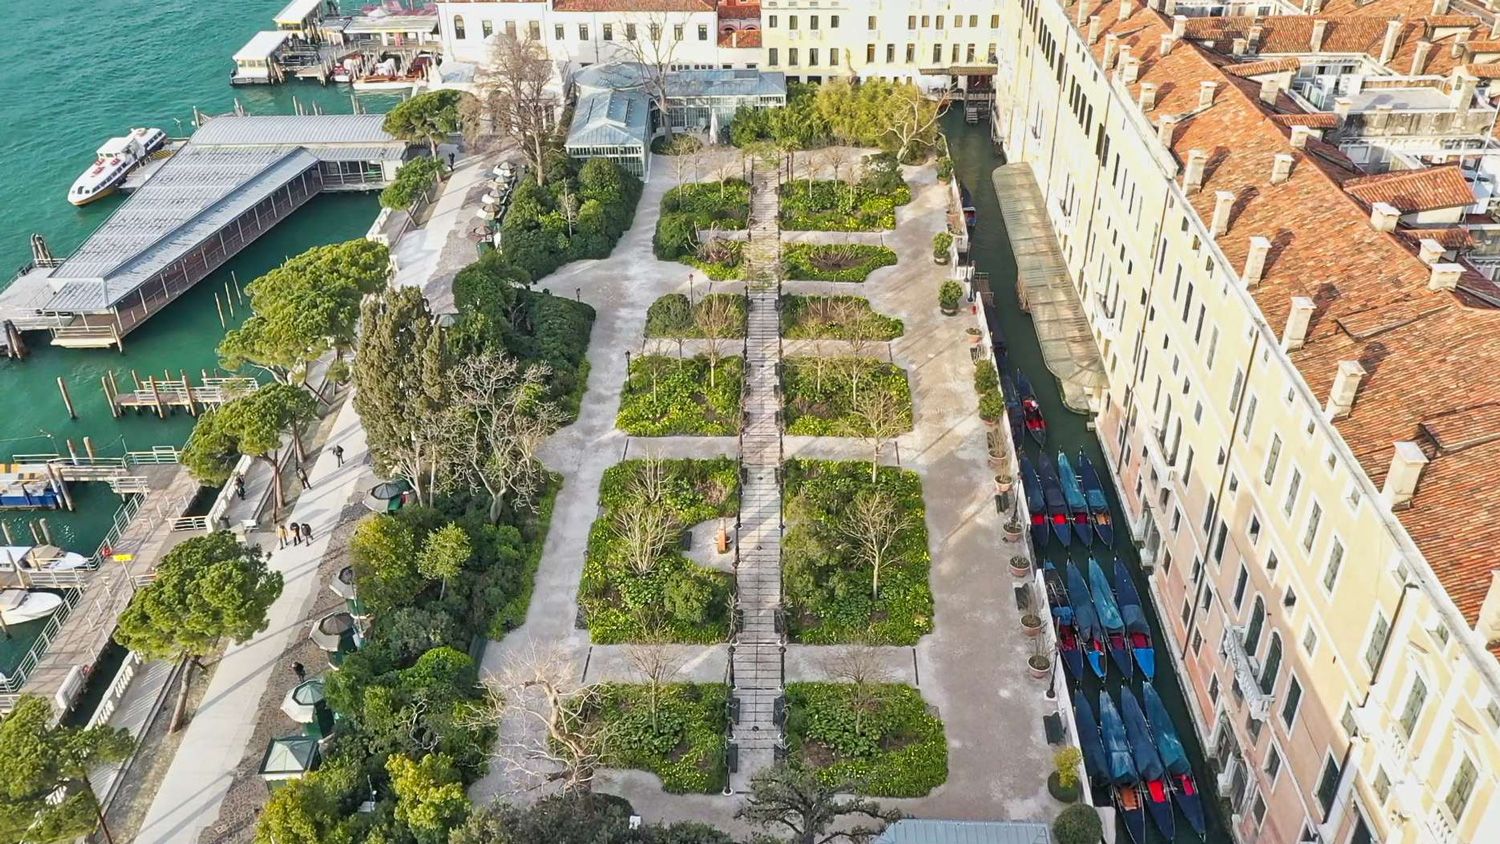 Venice Royal Gardens receive the European Prize for Cultural Heritage / Europa Nostra Award 2023 - Royal Gardens' aerial view